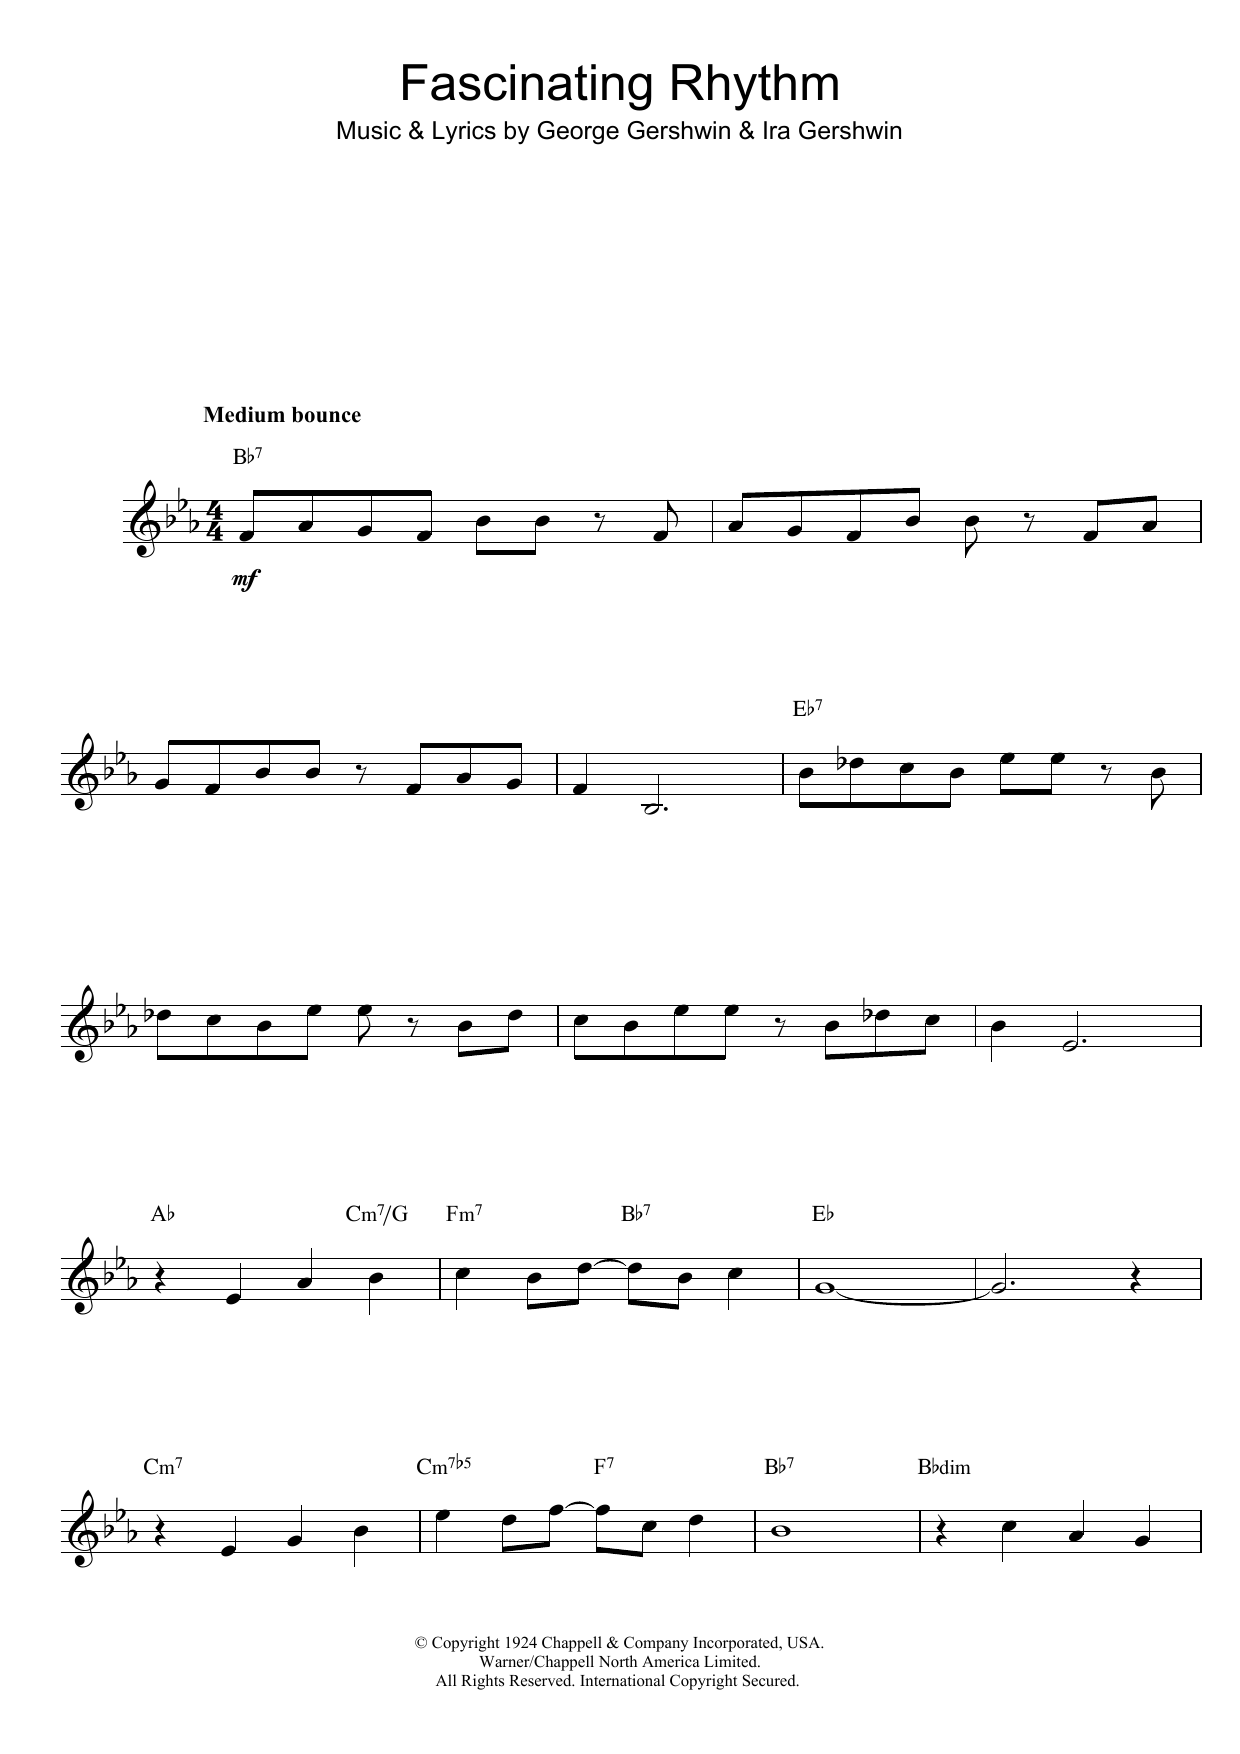 George Gershwin Fascinating Rhythm Sheet Music Notes & Chords for Melody Line, Lyrics & Chords - Download or Print PDF